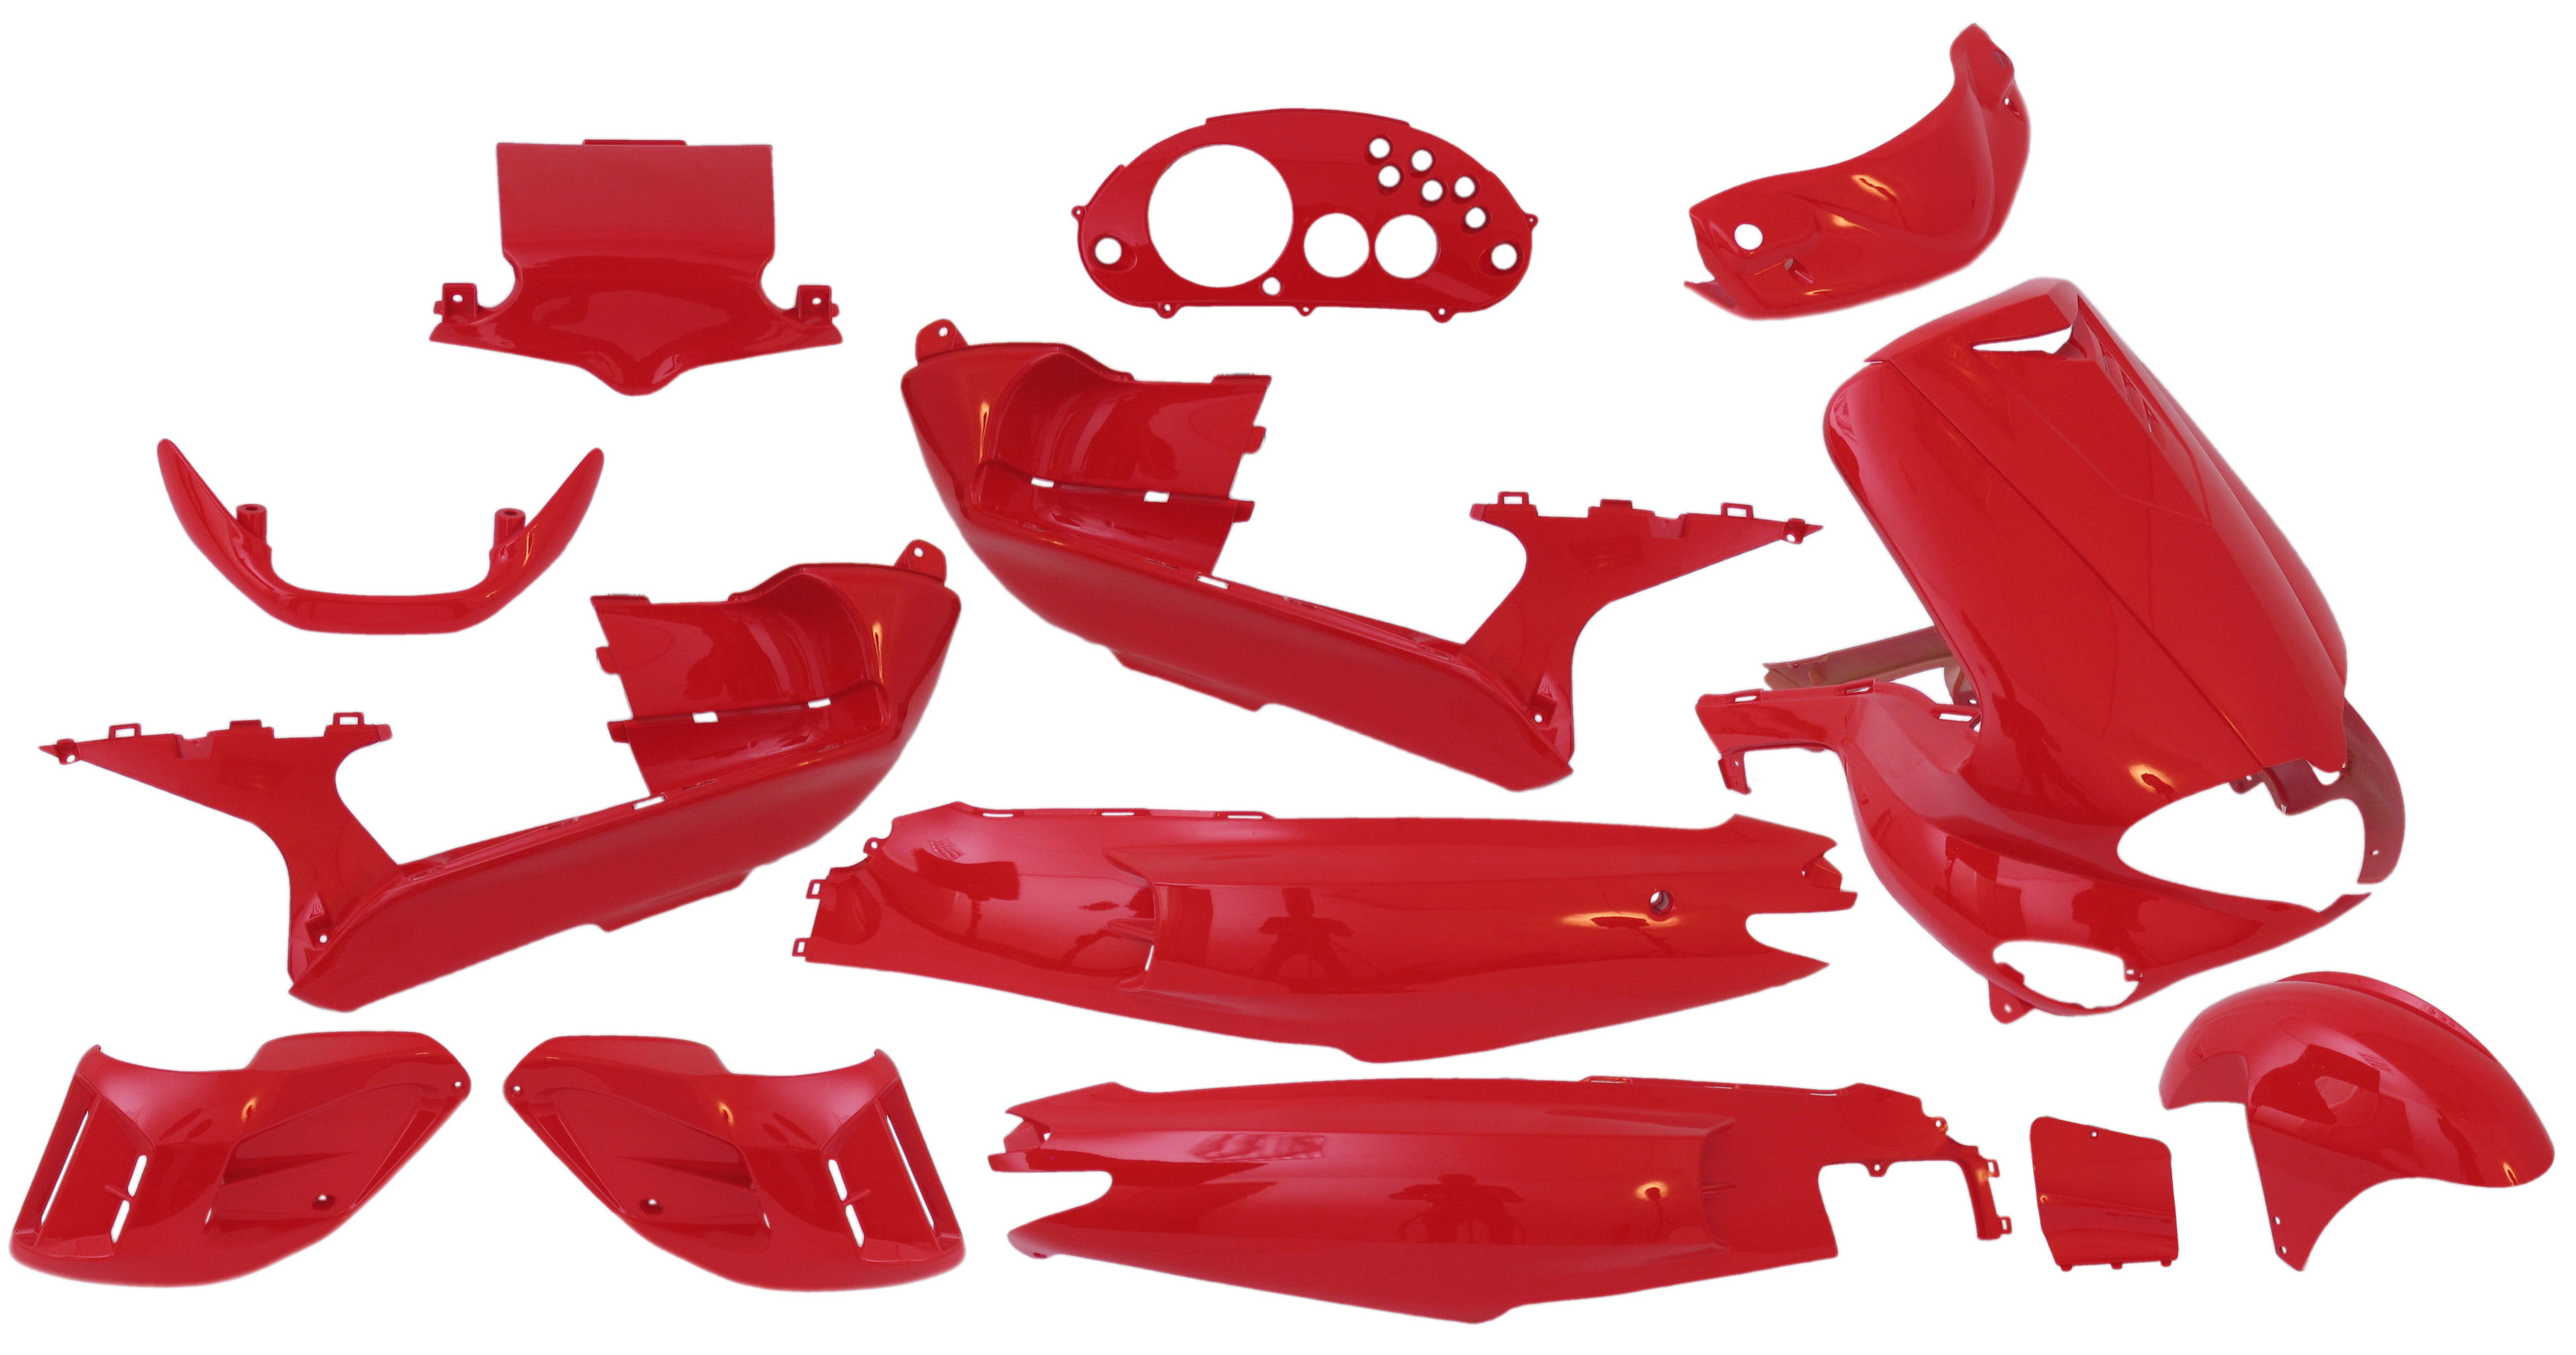 Bodykit Gilera Runner Ferrari red 15-pieces untill 08-2005